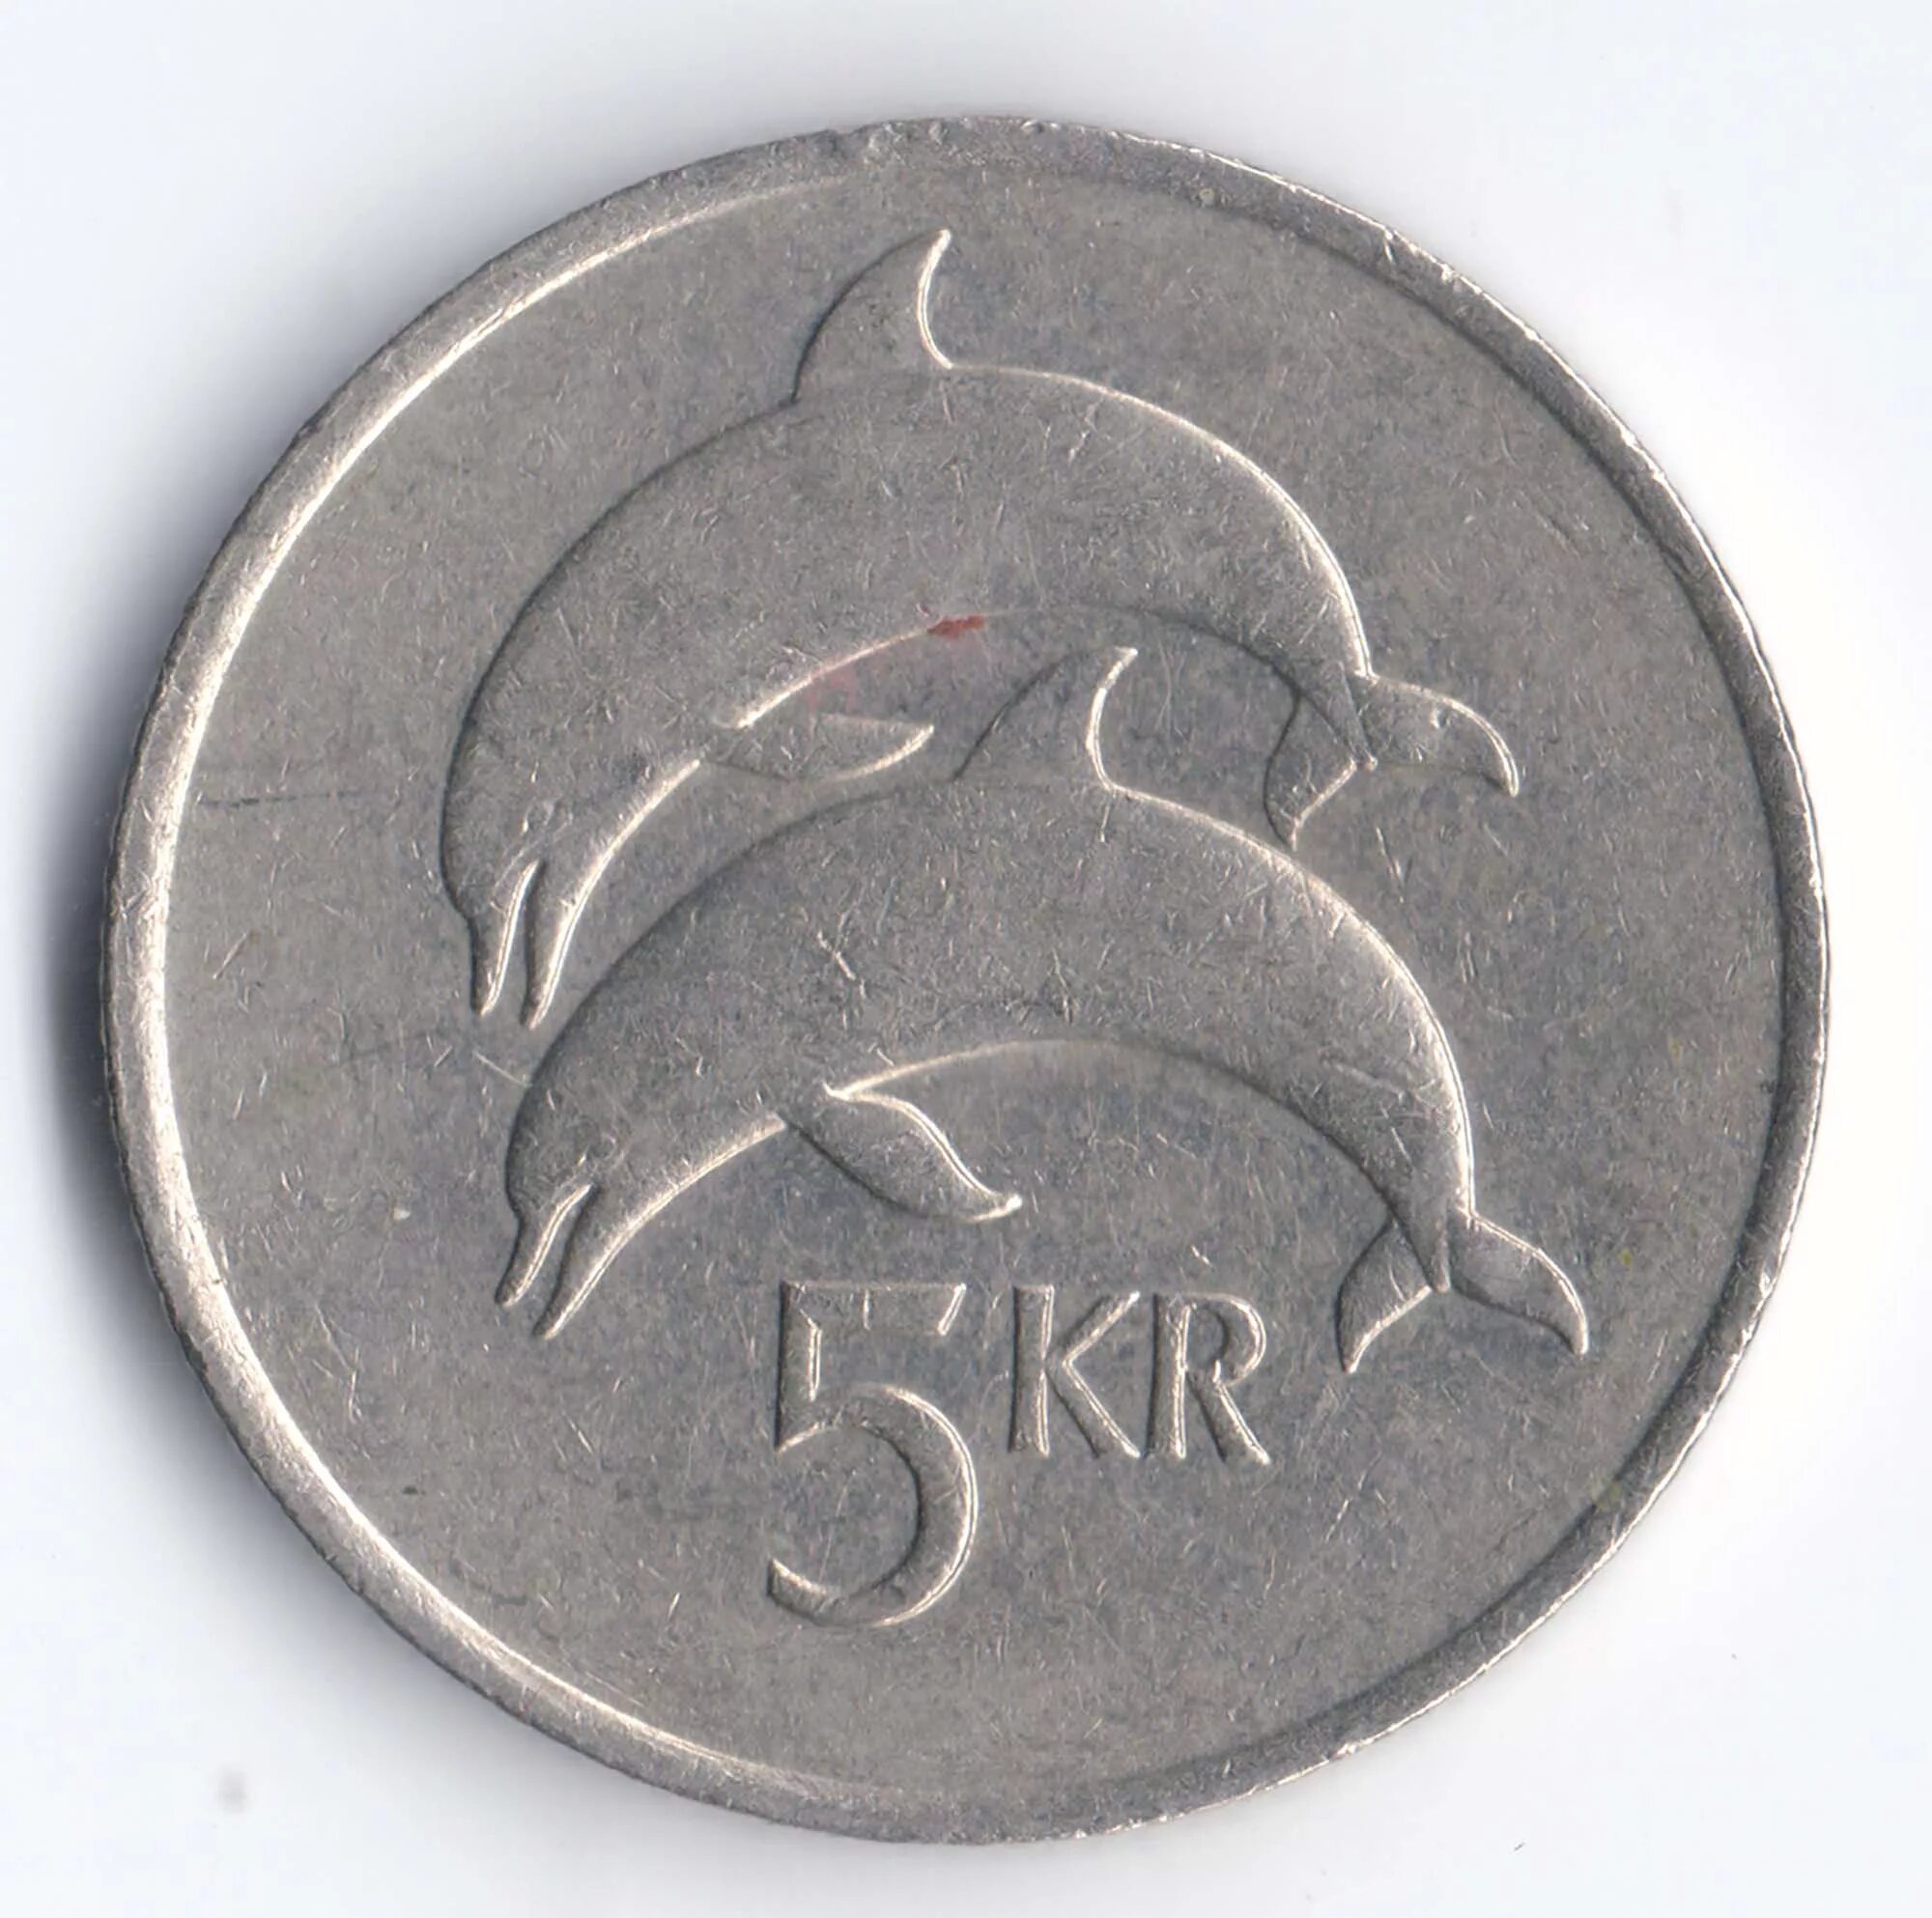 5 кронов в рублях. Fimm kronur Island 1981. 5 Крон 1987. Монеты Исландии. Монета 5 крон Исландия 1984.